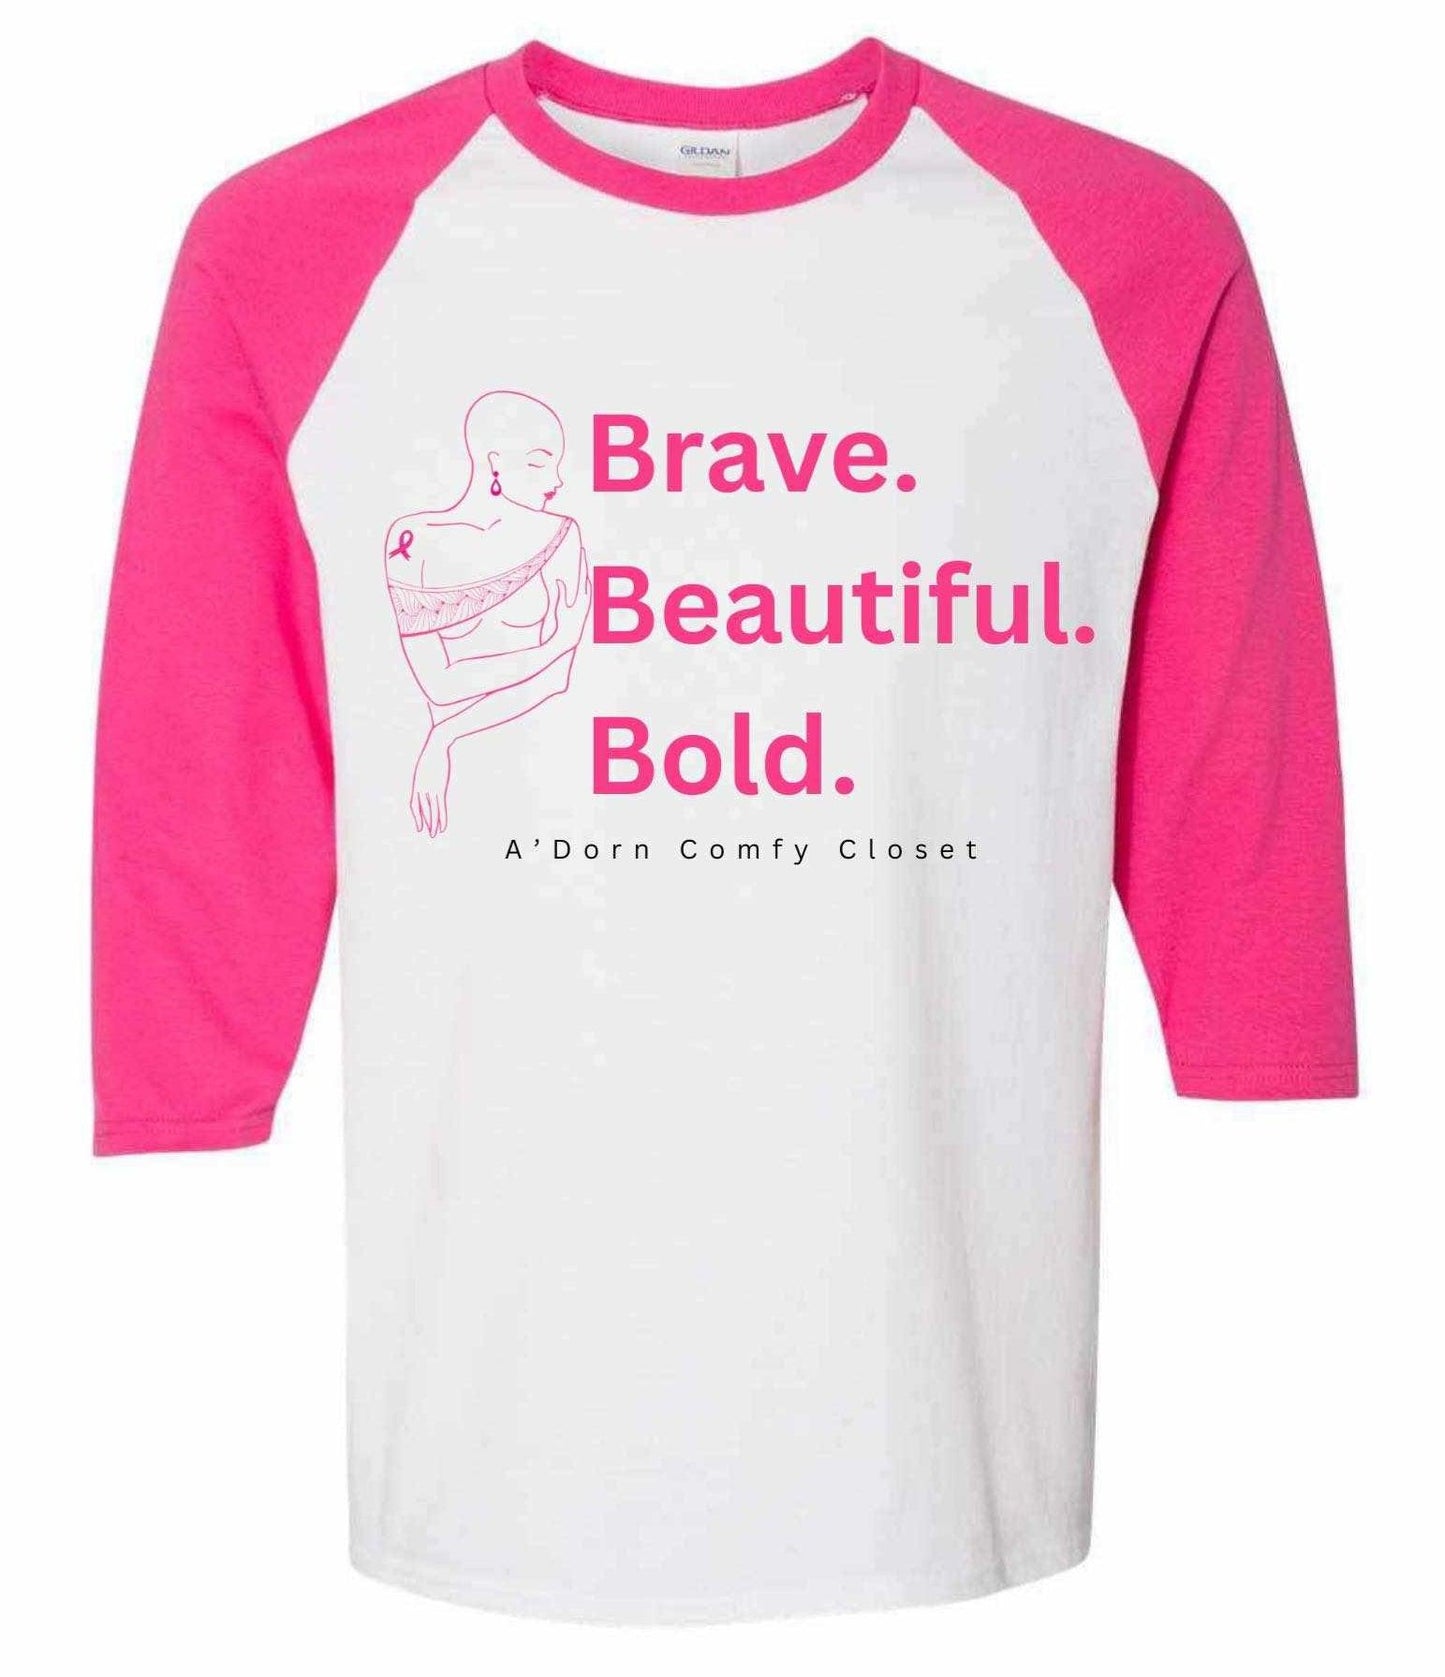 Breast Cancer Awareness Tshirts